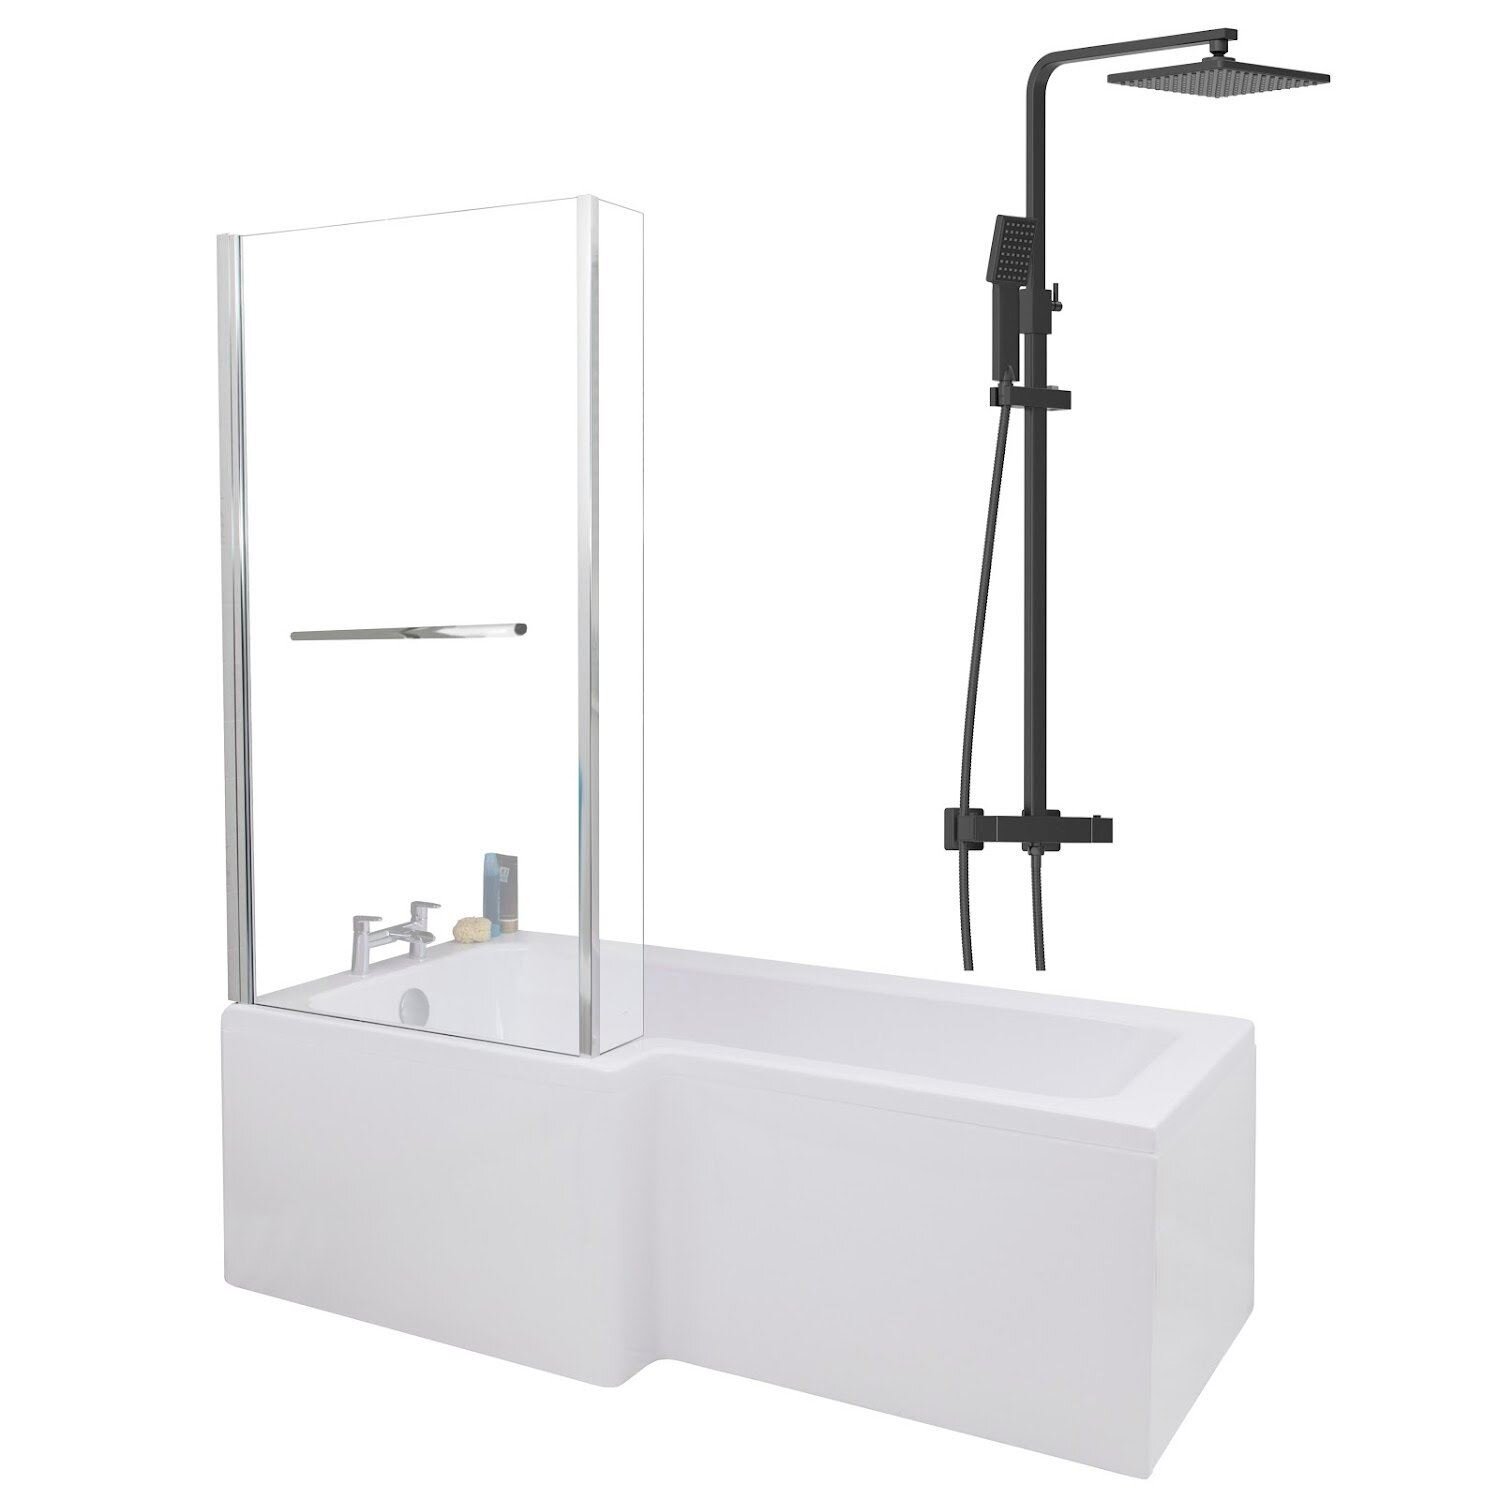 Bathroom L Shaped Shower Bath 1700mm LH Mixer Shower Screen Side End Panel White